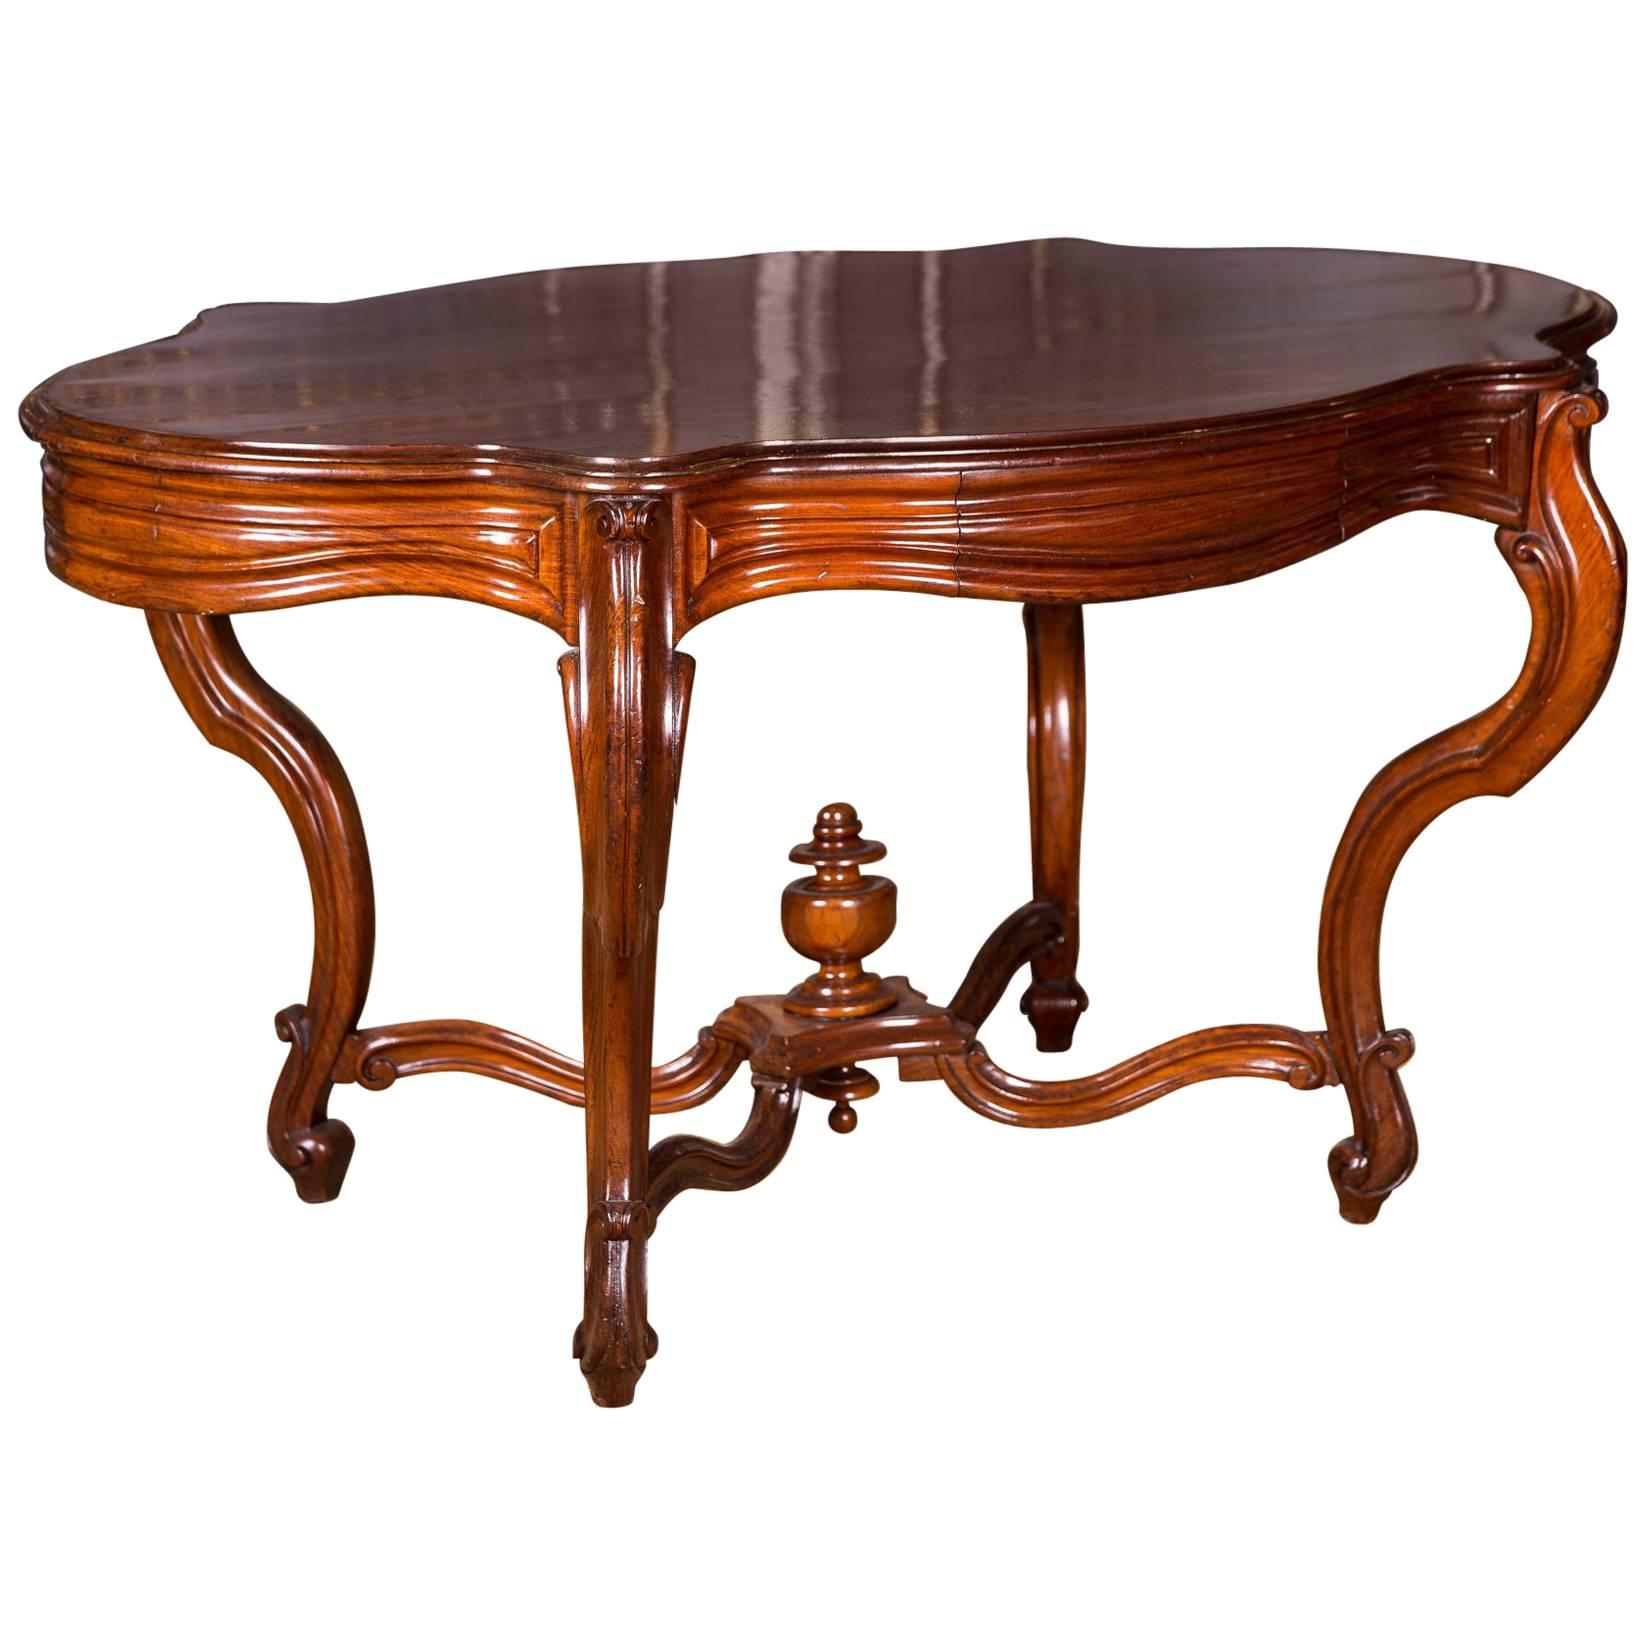 19th Century, Original Late Biedermeier Table Mahogany Veneer,  circa 1860 